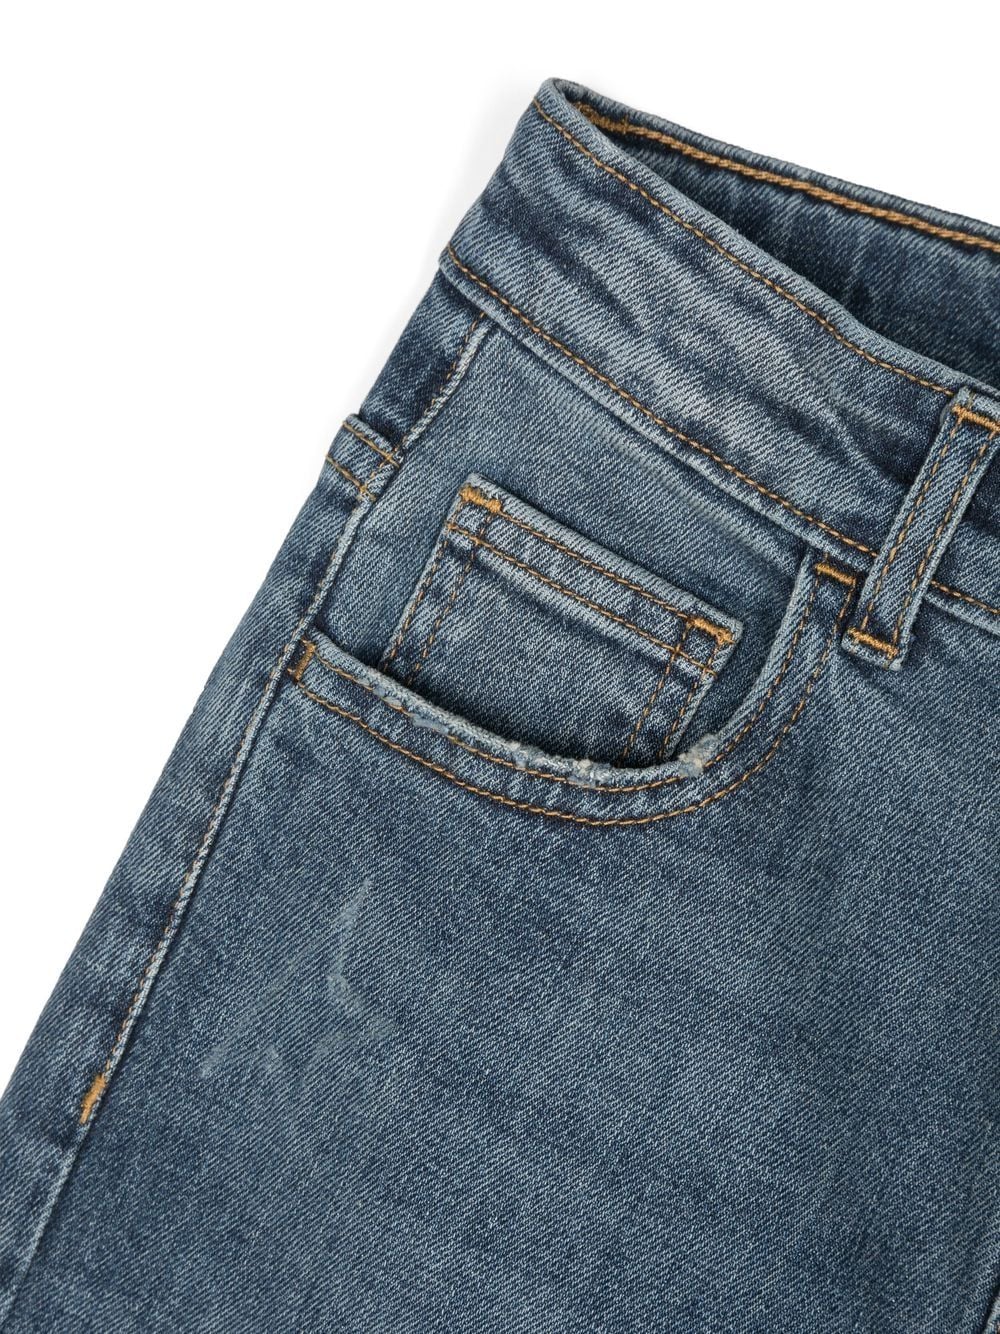 Pantalon jean enfant indigo